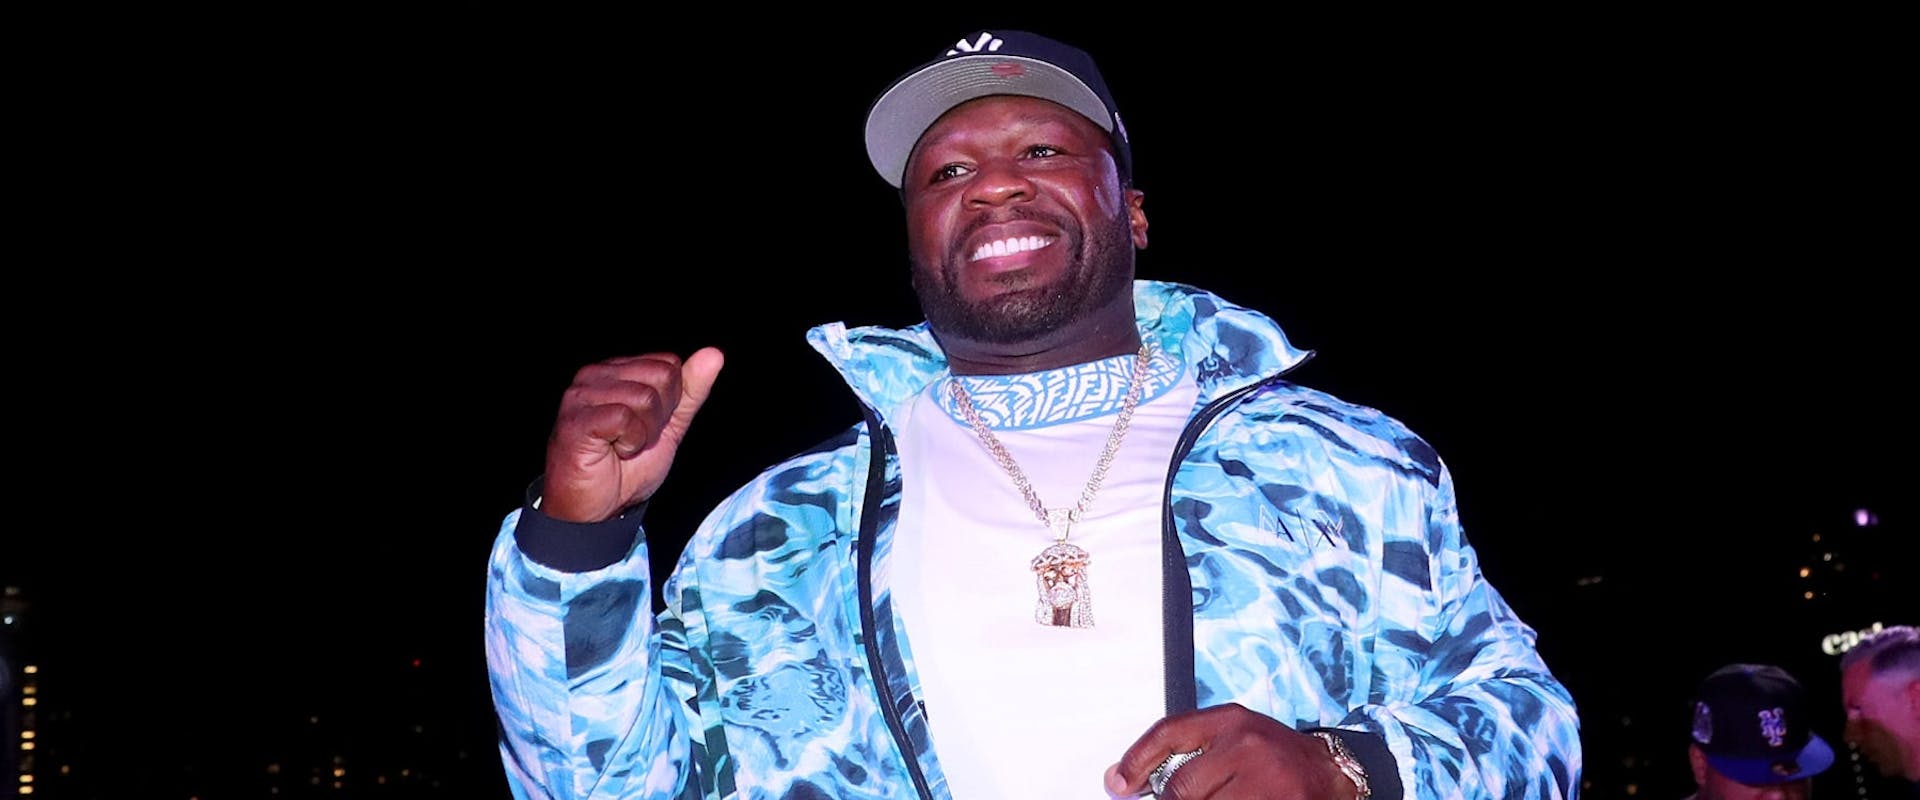  Curtis "50 Cent" Jackson III performs during the Celia Cruz x Skott Marsi NFT Launch at ITG Miami on June 03, 2021 in Miami, Florida. 